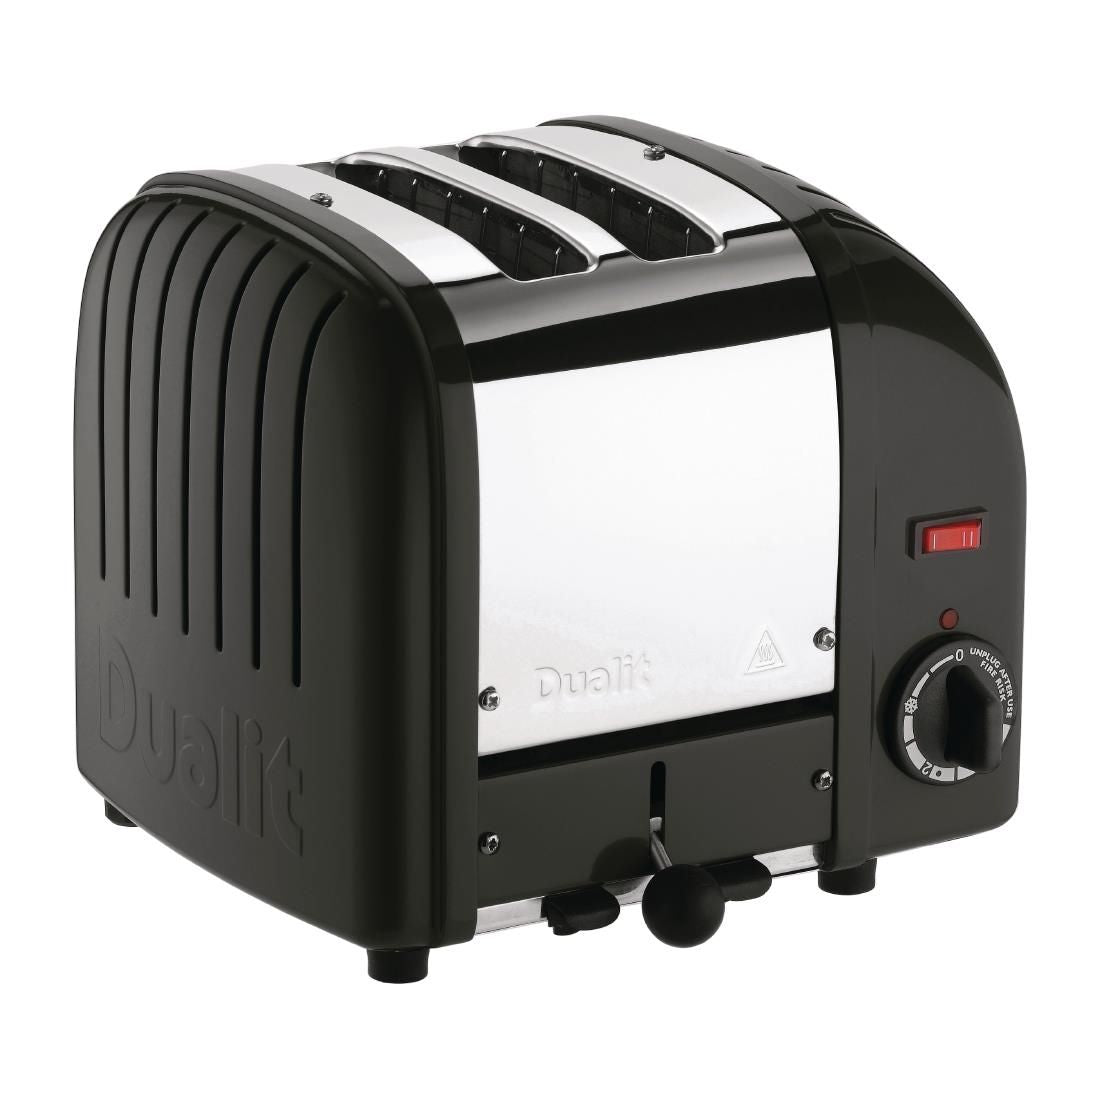 Dualit 2 Slice Vario Toaster Black 20237 JD Catering Equipment Solutions Ltd